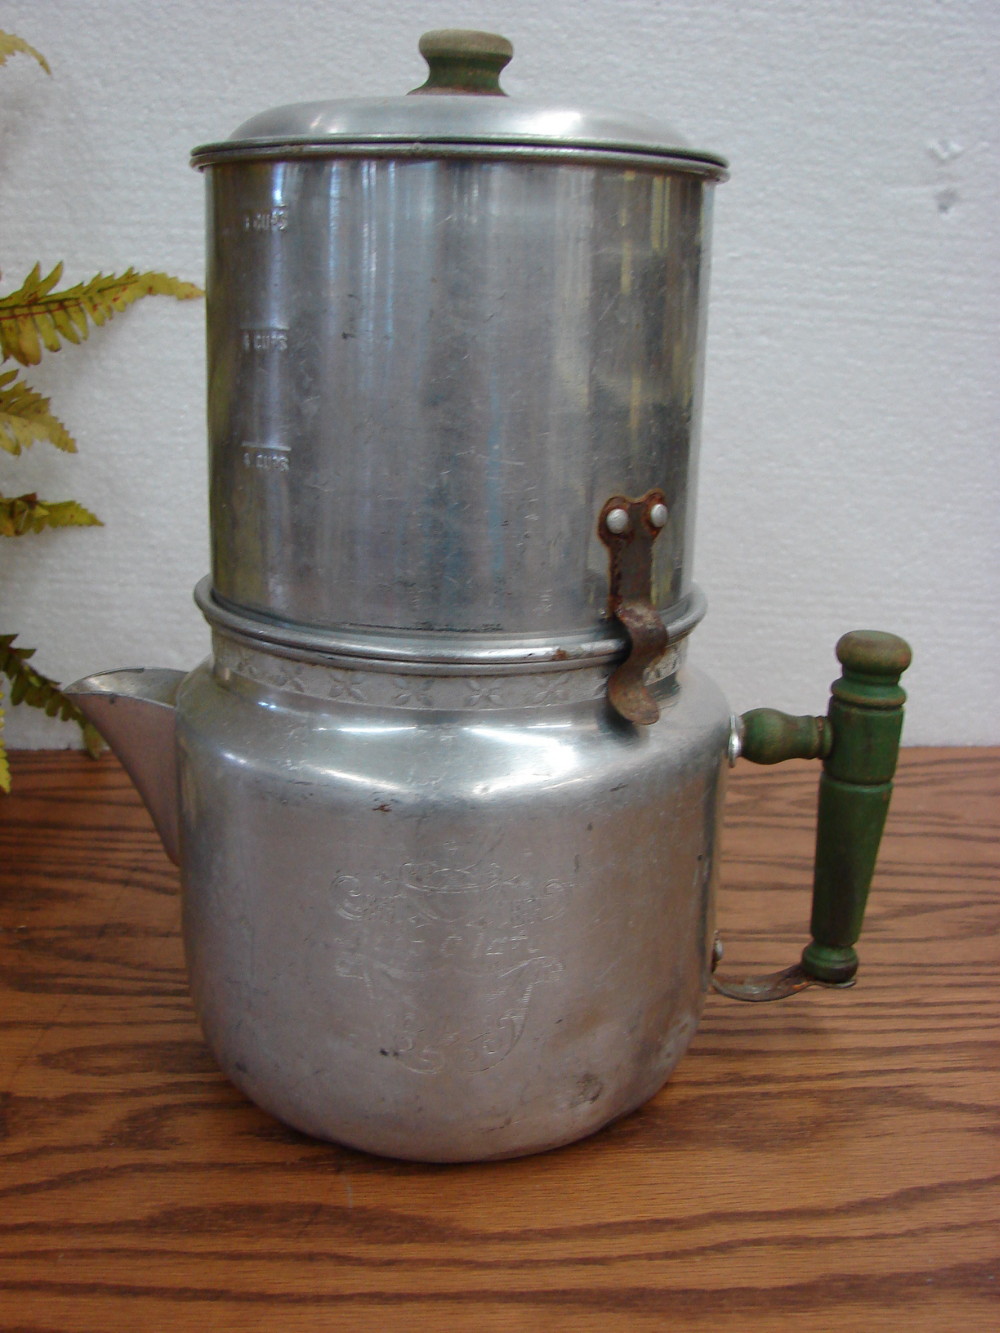 1940's Percolator Coffee Pot still used for camping & home : r/BuyItForLife